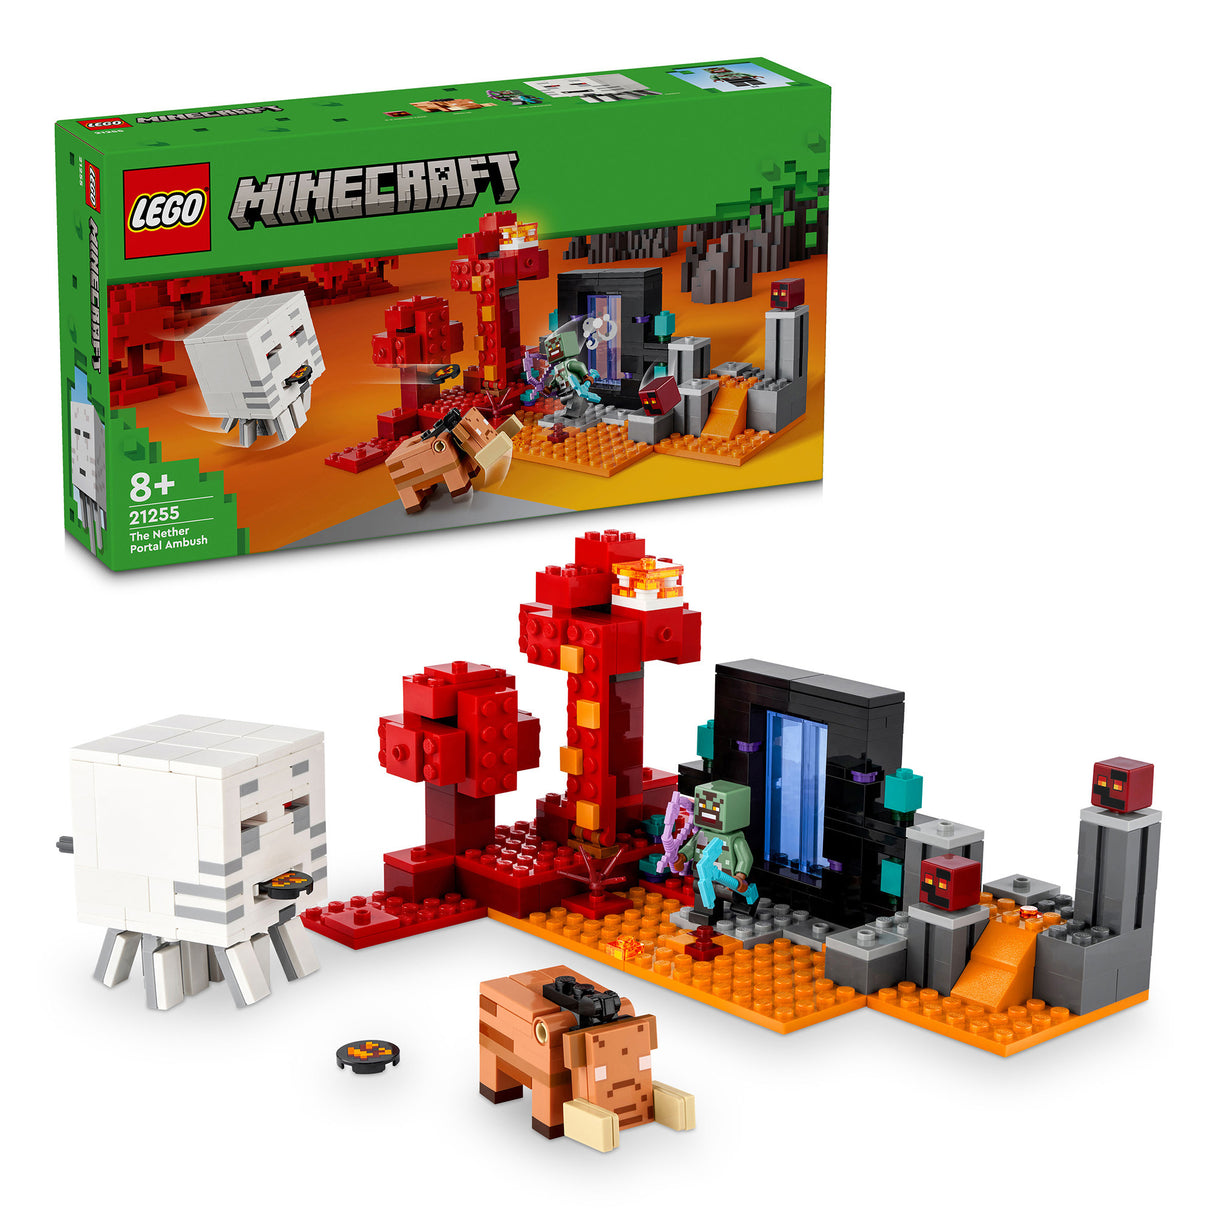 LEGO Minecraft The Nether Portal Ambush 21255, (352-pieces)